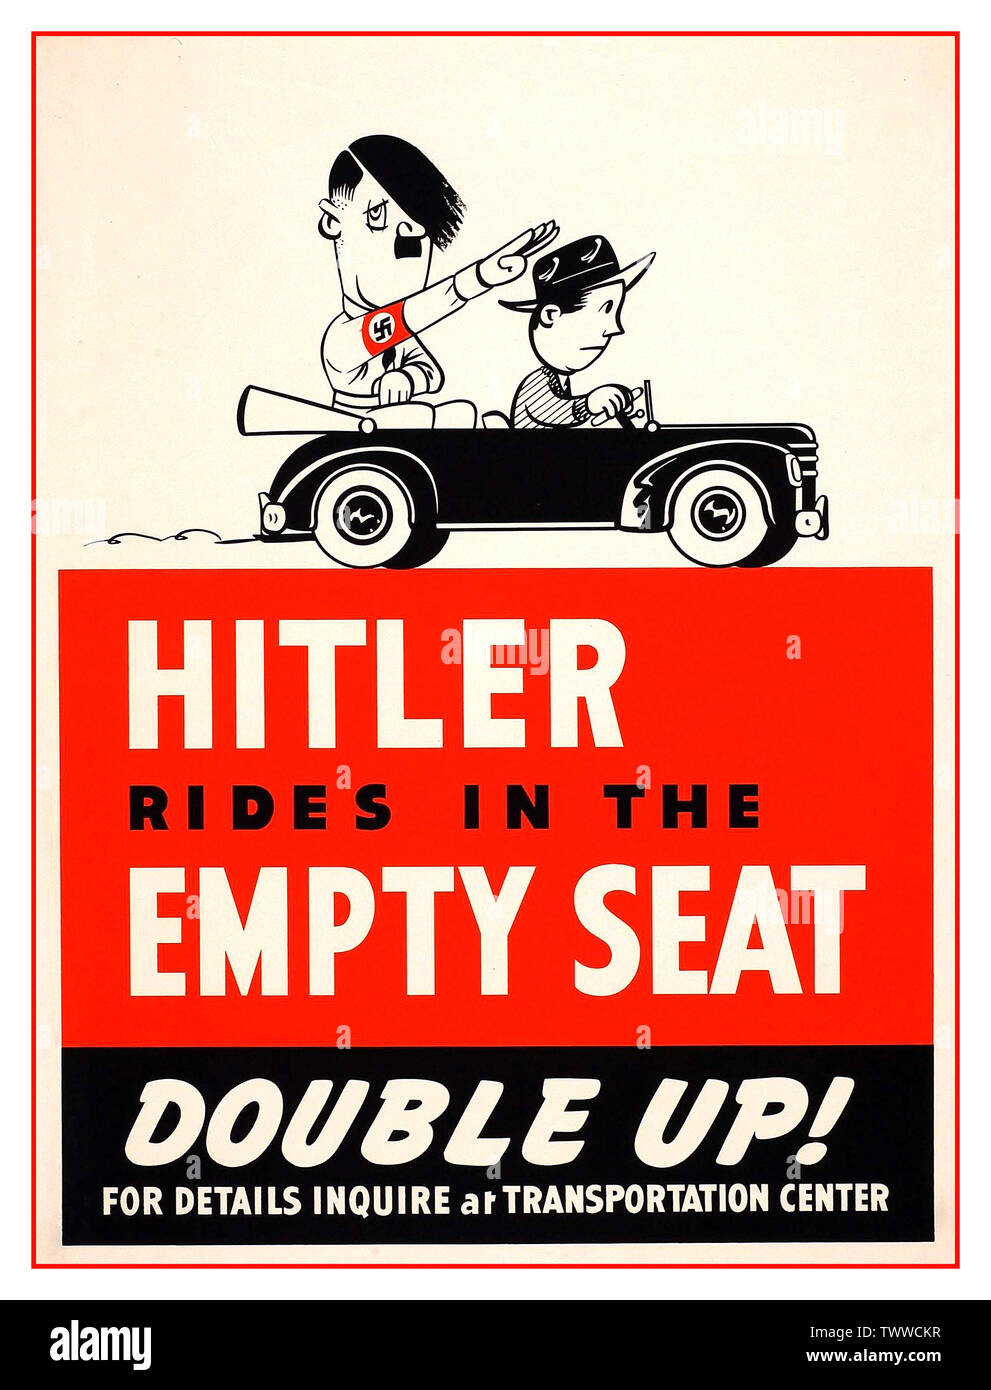 Vintage WW2 American Propaganda Poster Cartoon “Hitler rides in the Empty Seat” Poster promoting car share schemes (1943, USA) World War II Second World War Stock Photo